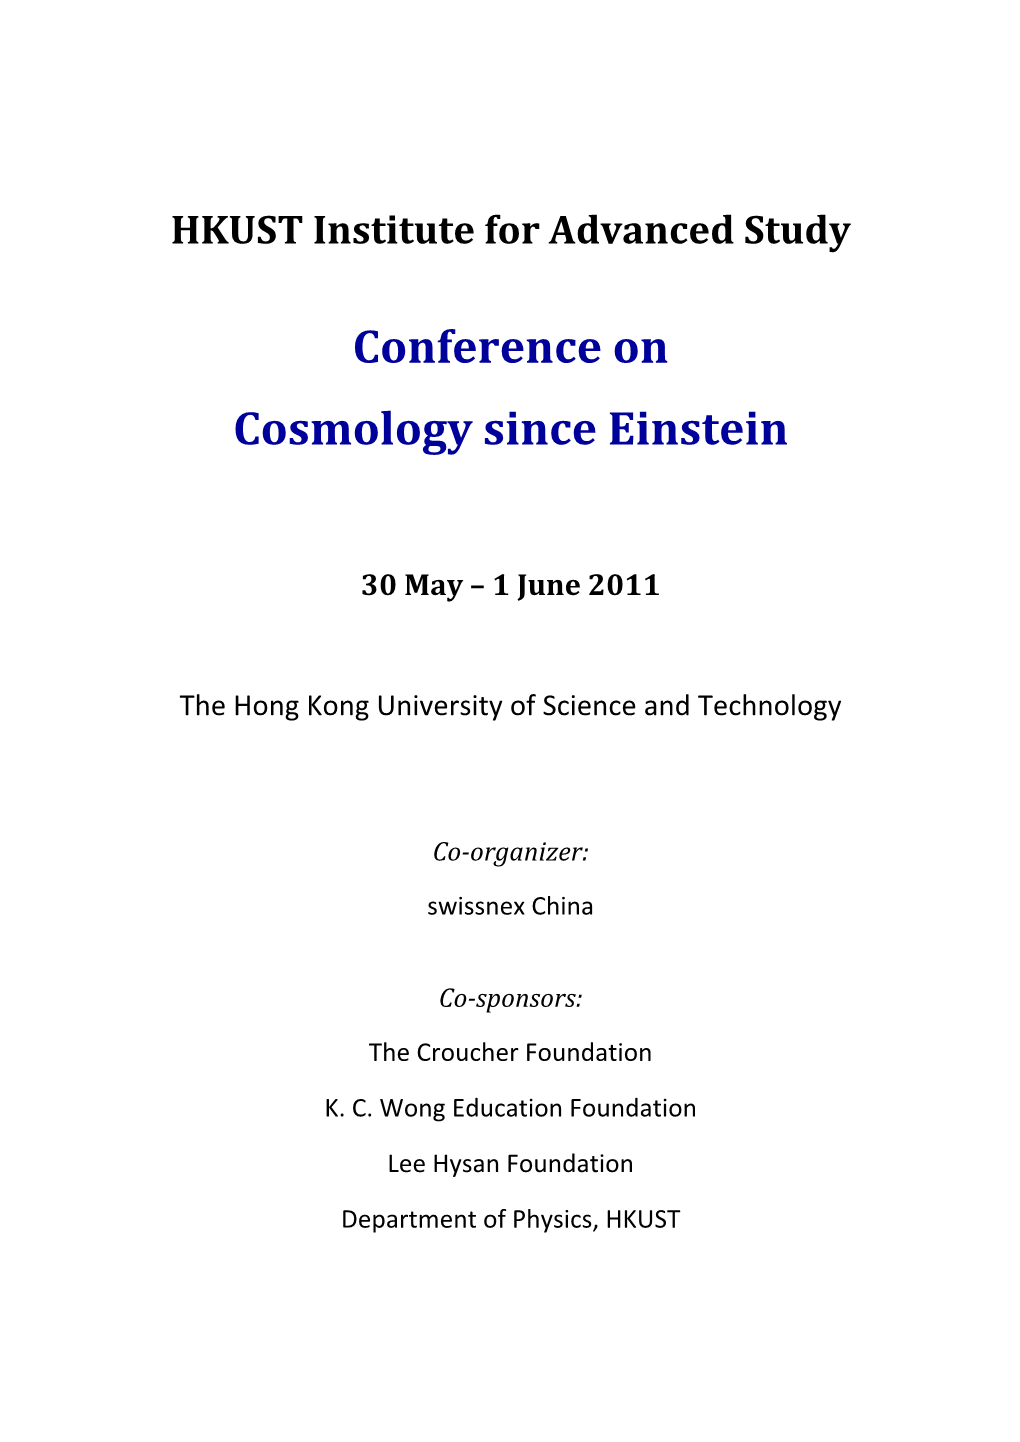 Conference on Cosmology Since Einstein